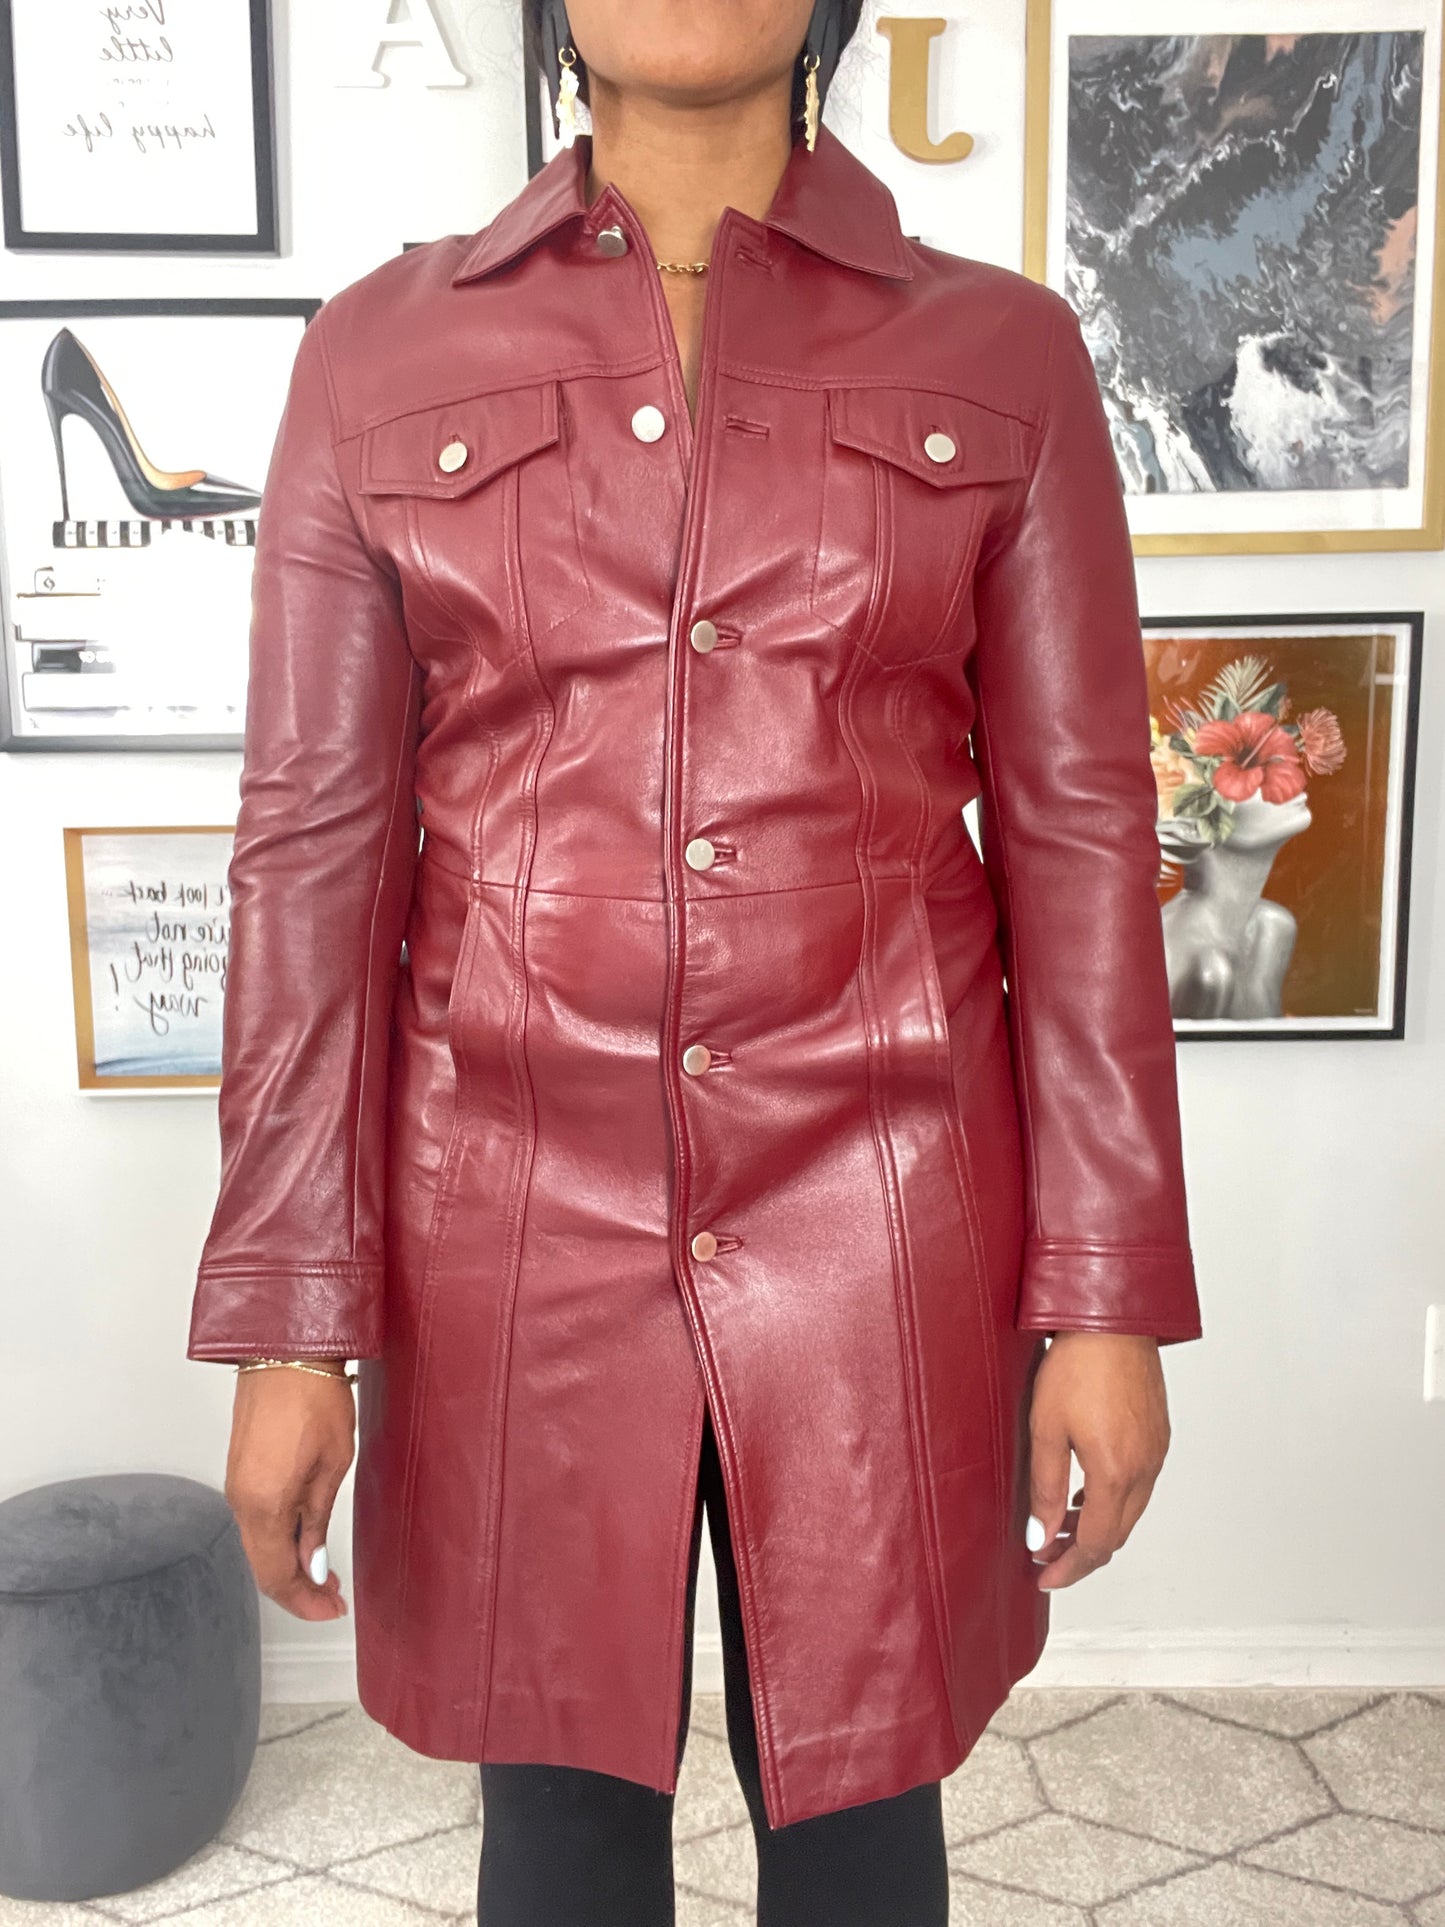 Vintage Leather Jacket/Dress